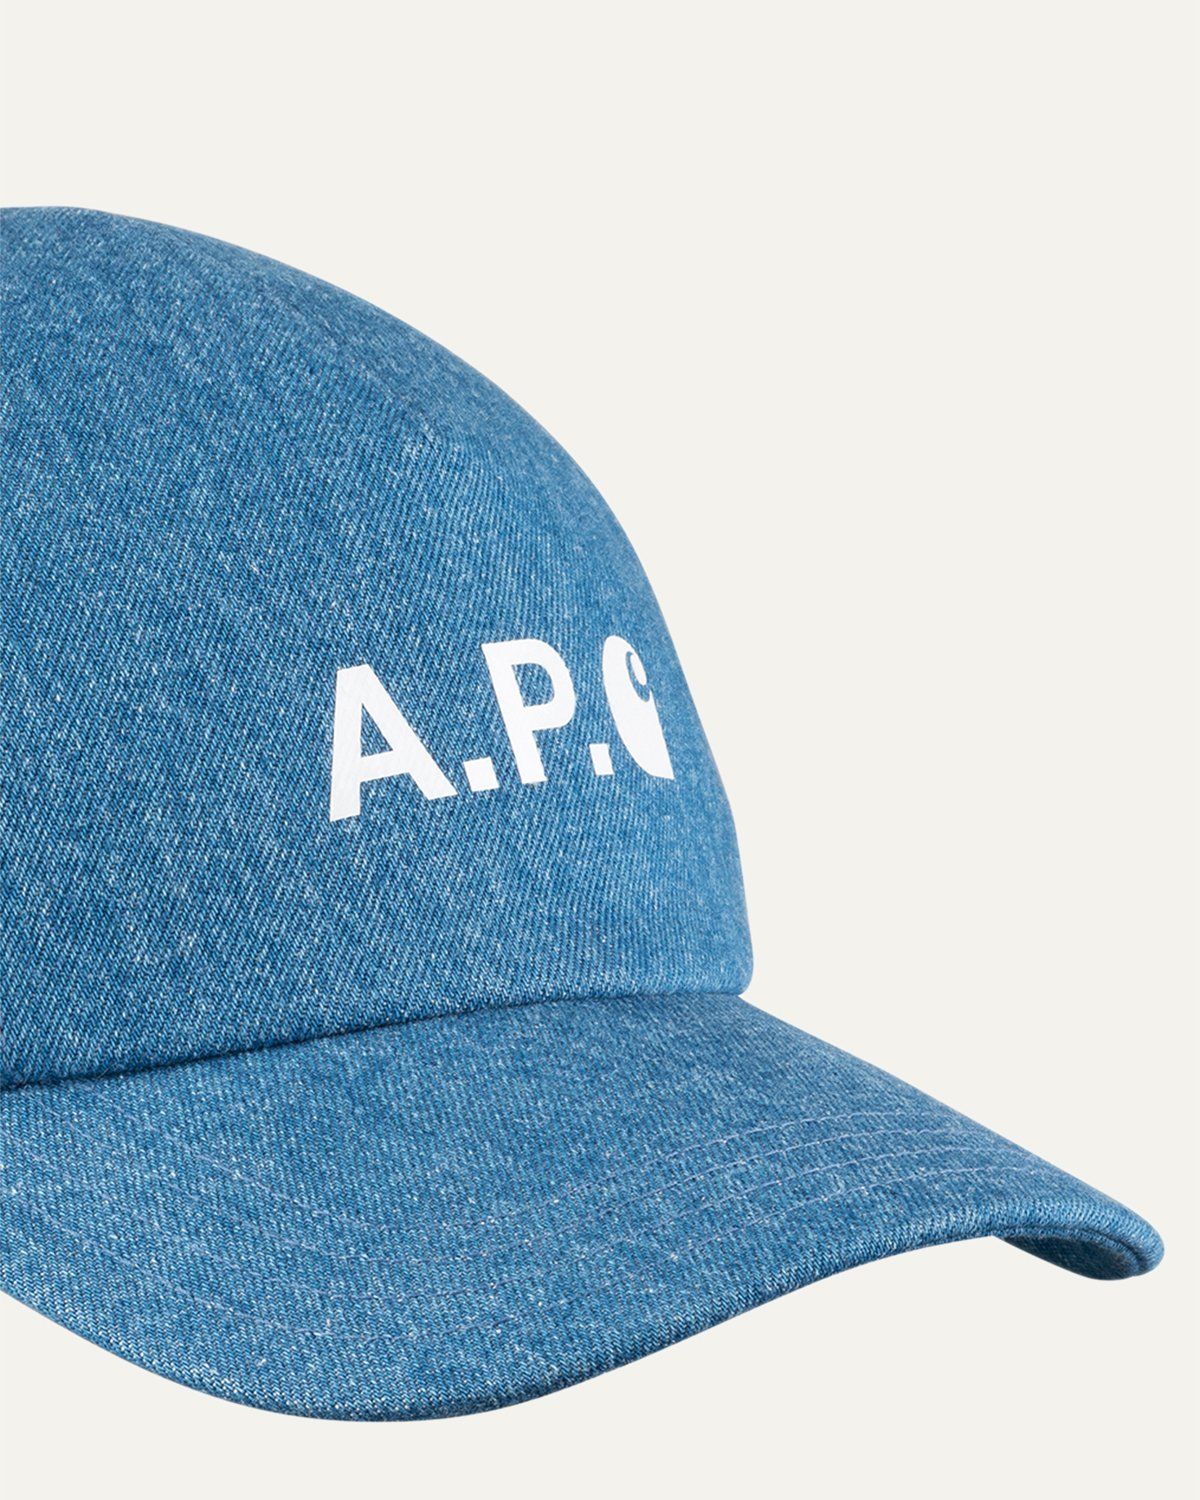 A.P.C. x Carhartt WIP – Cameron Baseball Cap Indigo - Hats - Blue - Image 4